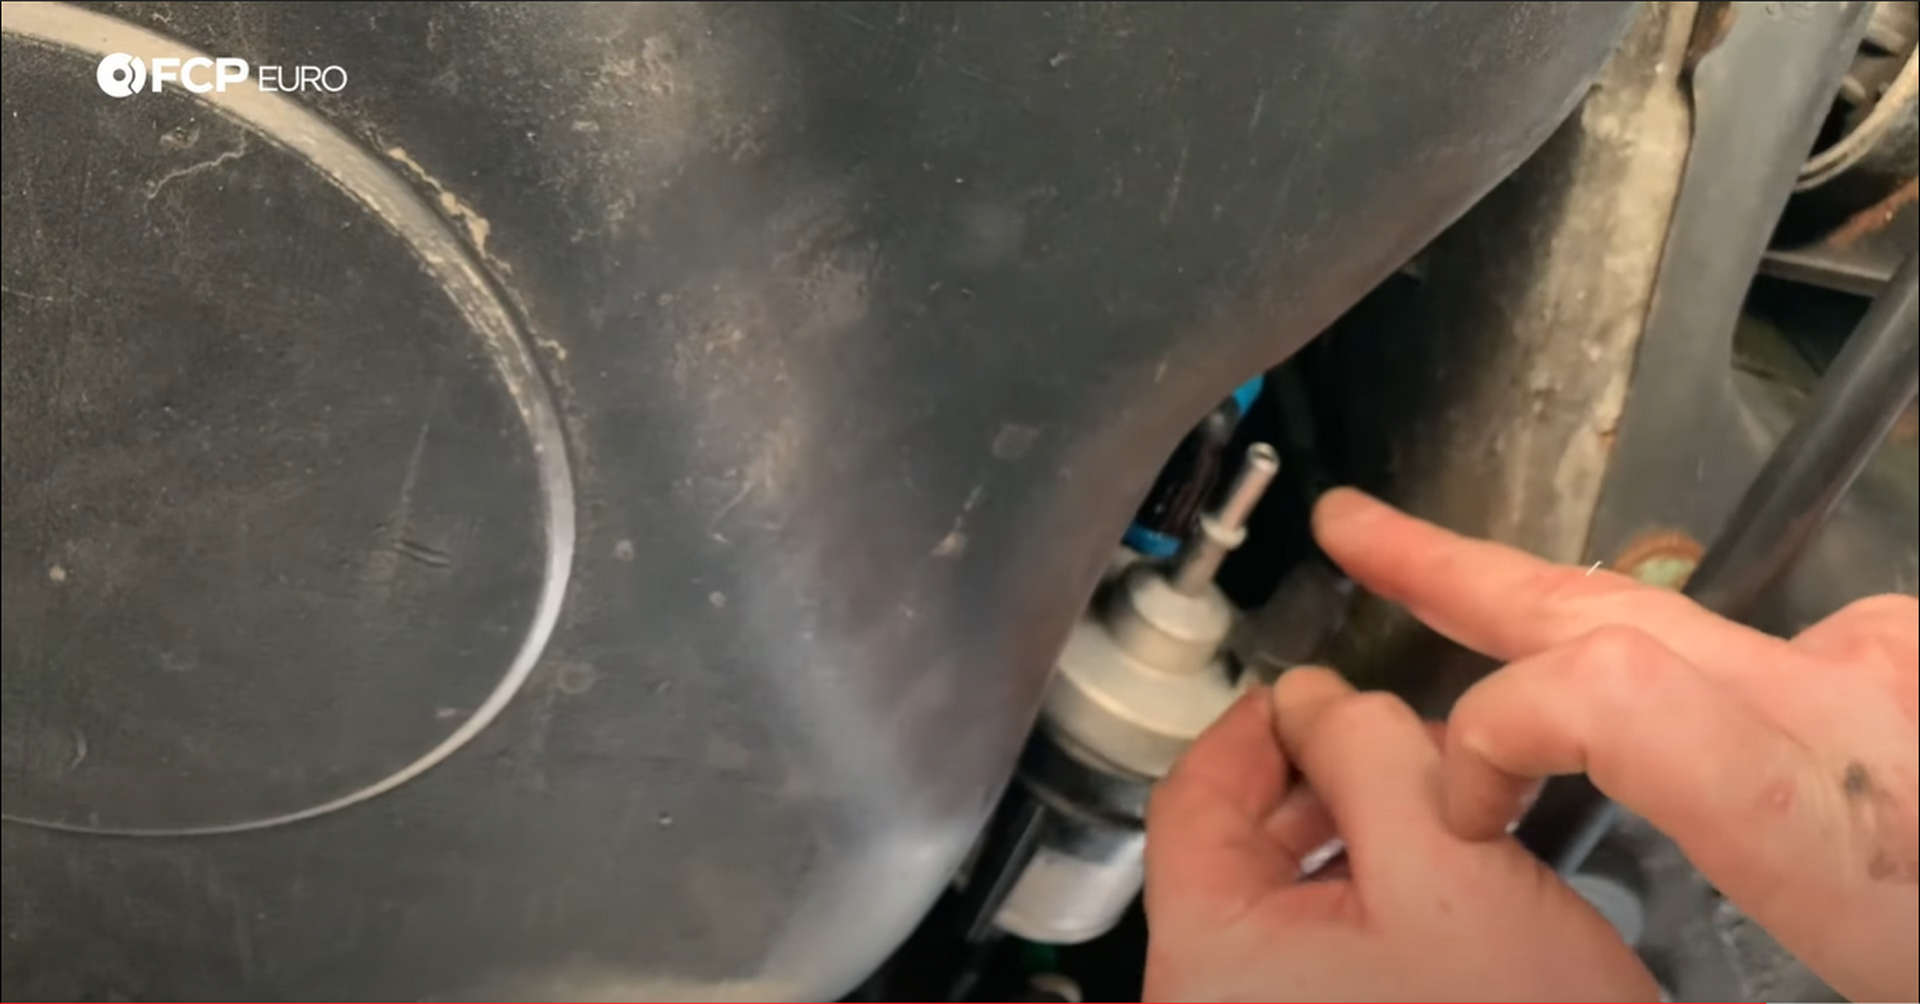 DIY VW GTI Fuel Pump removing the fuel filter hoses